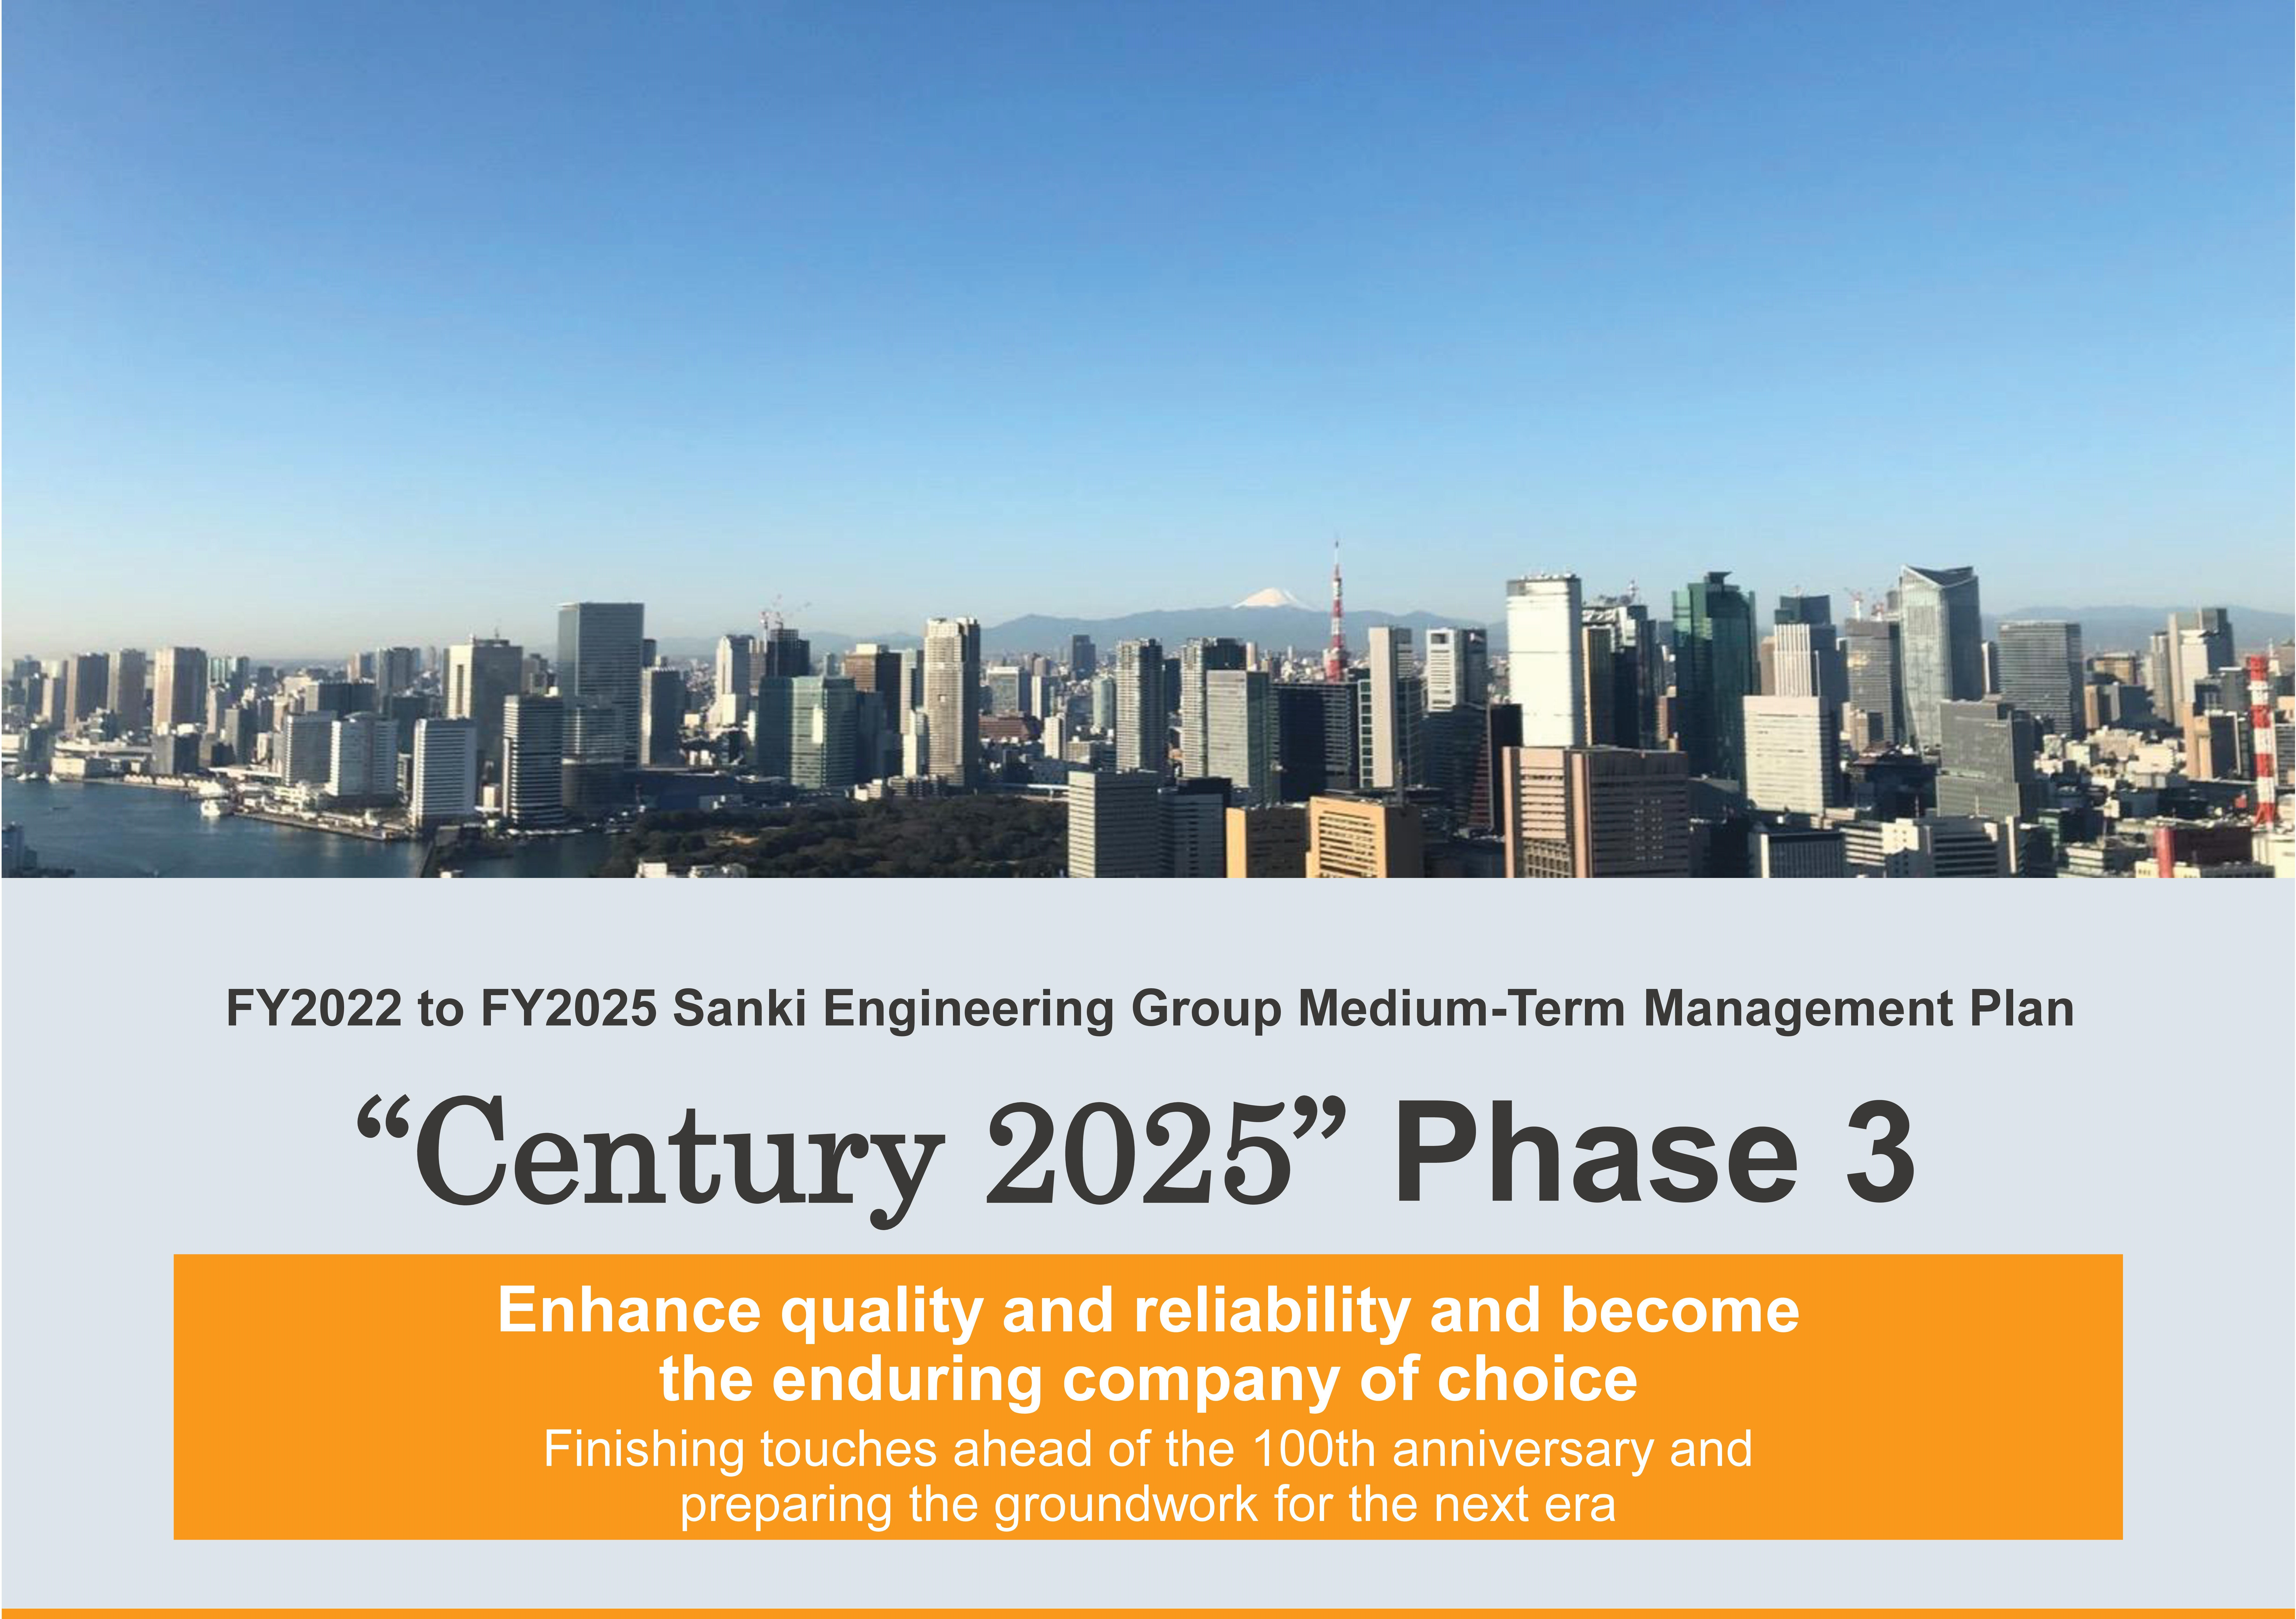 medium-term management plan “Century 2025” Phase 3 (FY2022 - FY2025)